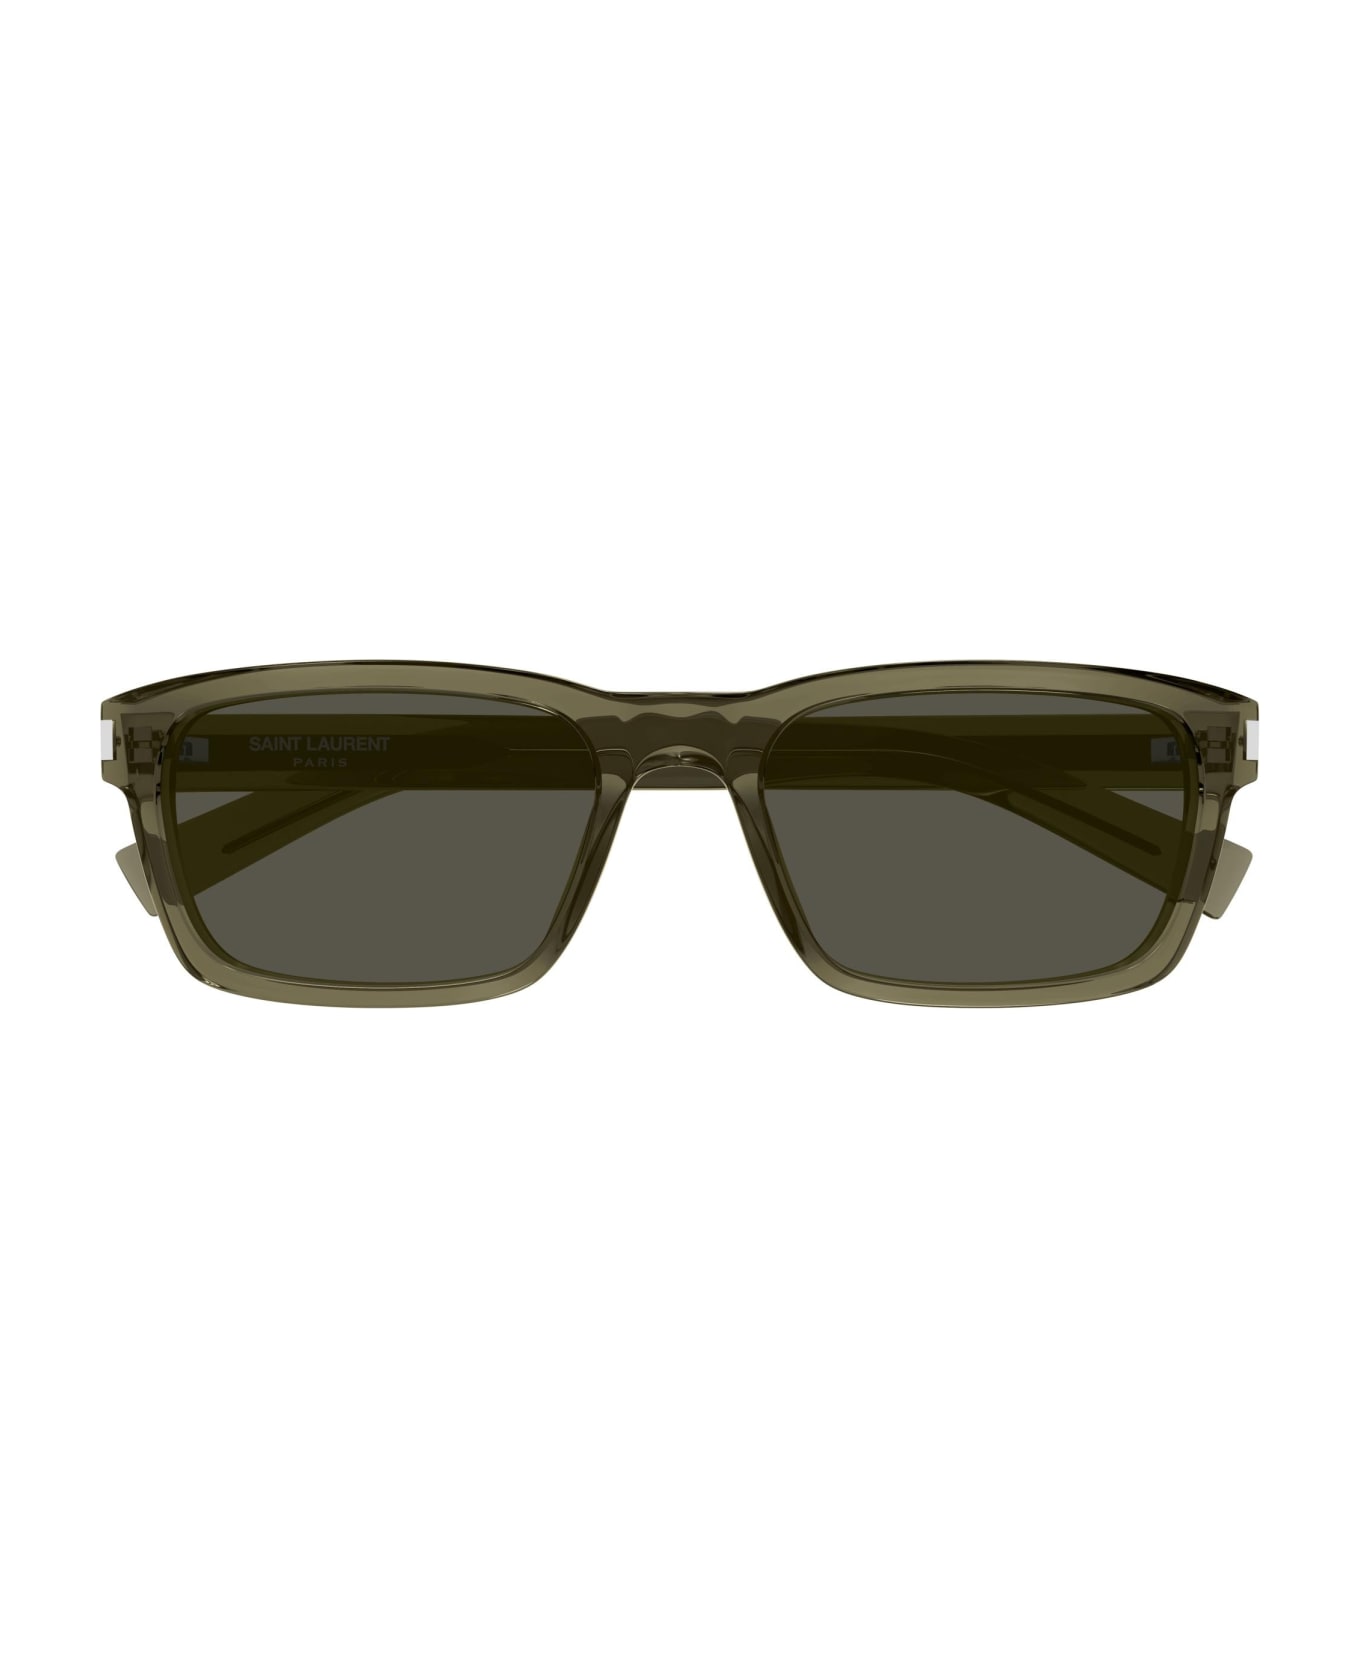 Saint Laurent Eyewear Sunglasses - Marrone trasparente/Grigio